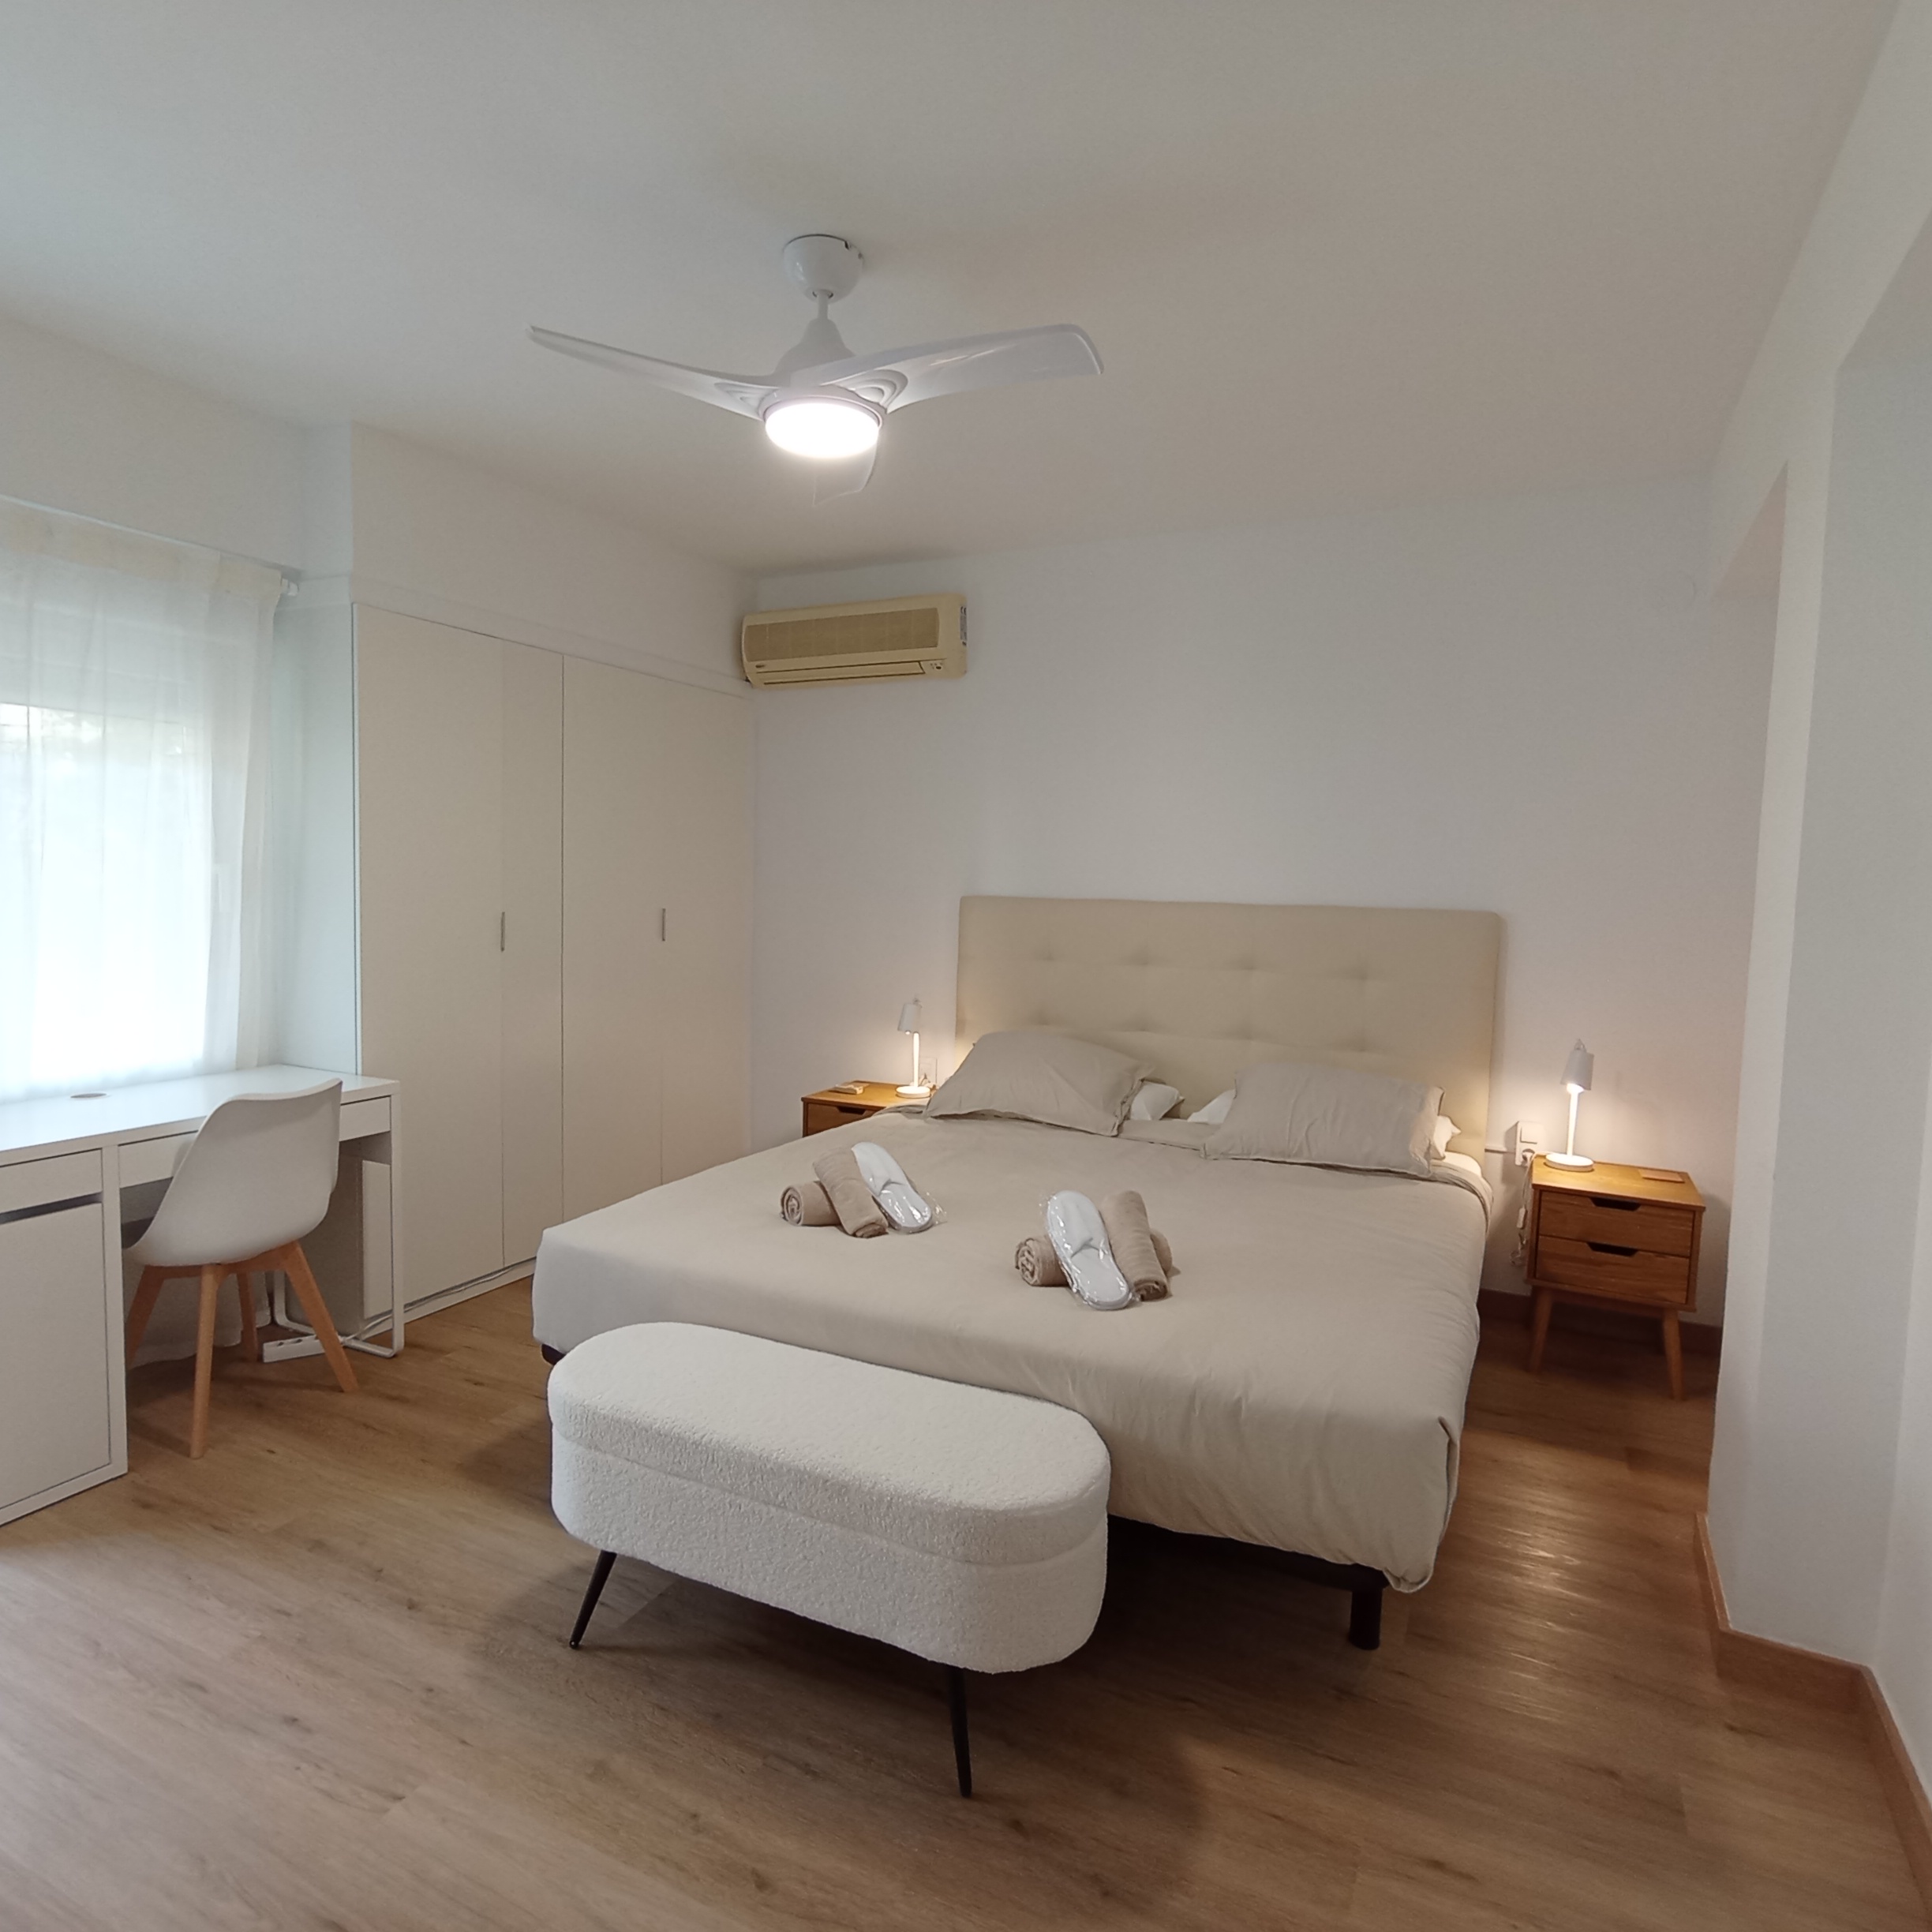 Trafalgar - 3 Bedroom apartment for rent in Valencia double bedroom 4